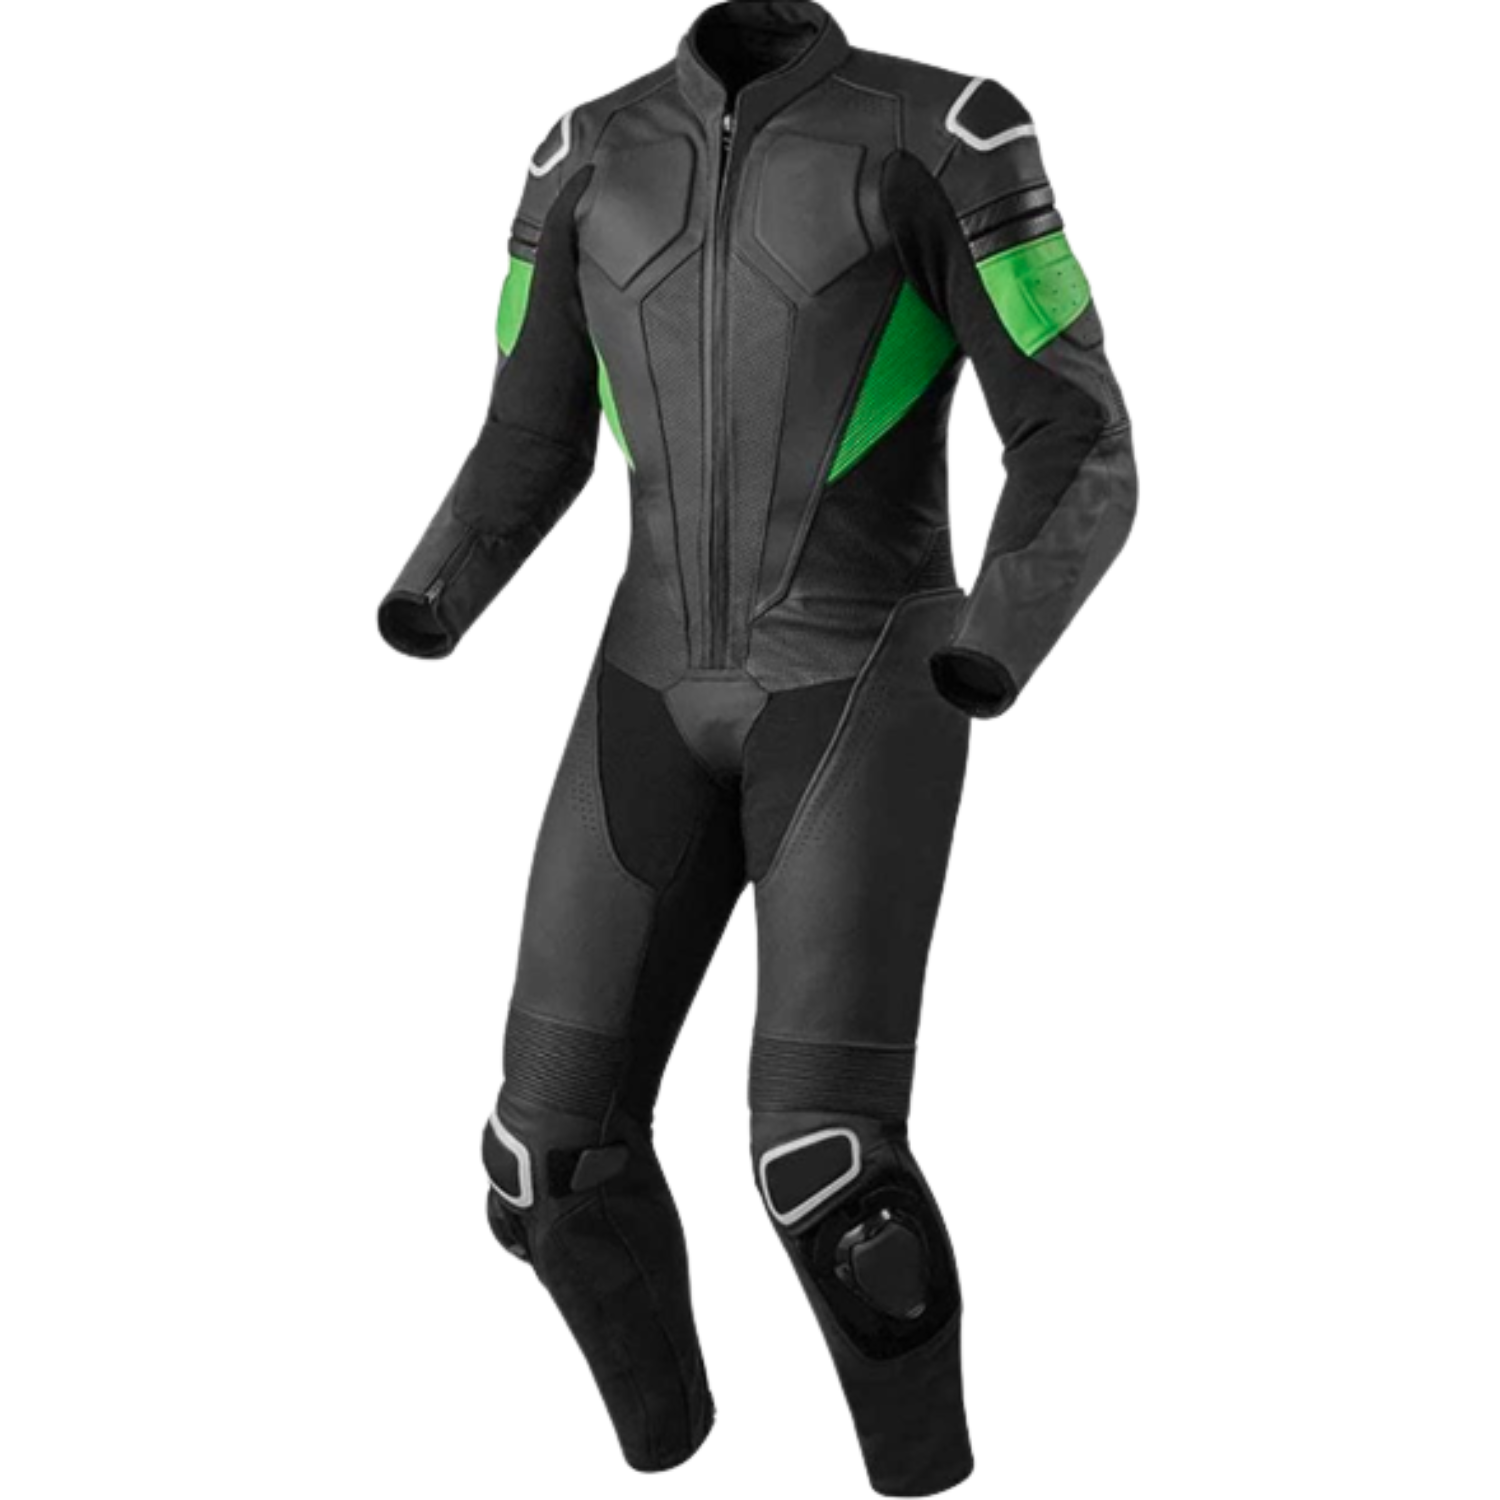 LEATHERAY Men’s Fashion Motorbike Real Leather Suit